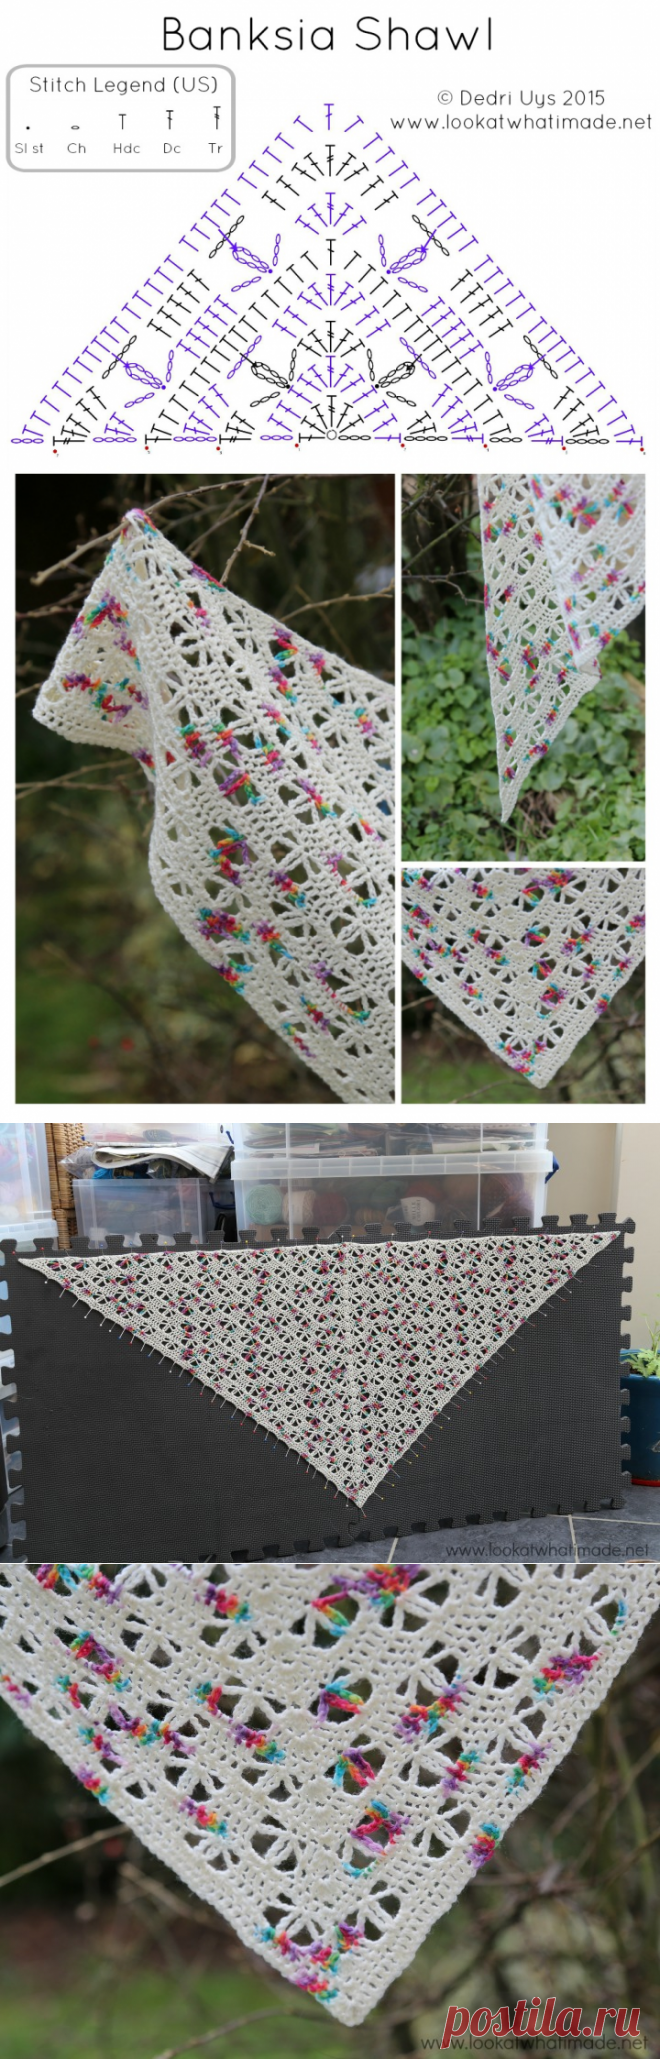 Banksia Shawl Crochet Pattern - посмотрите, что я сделал